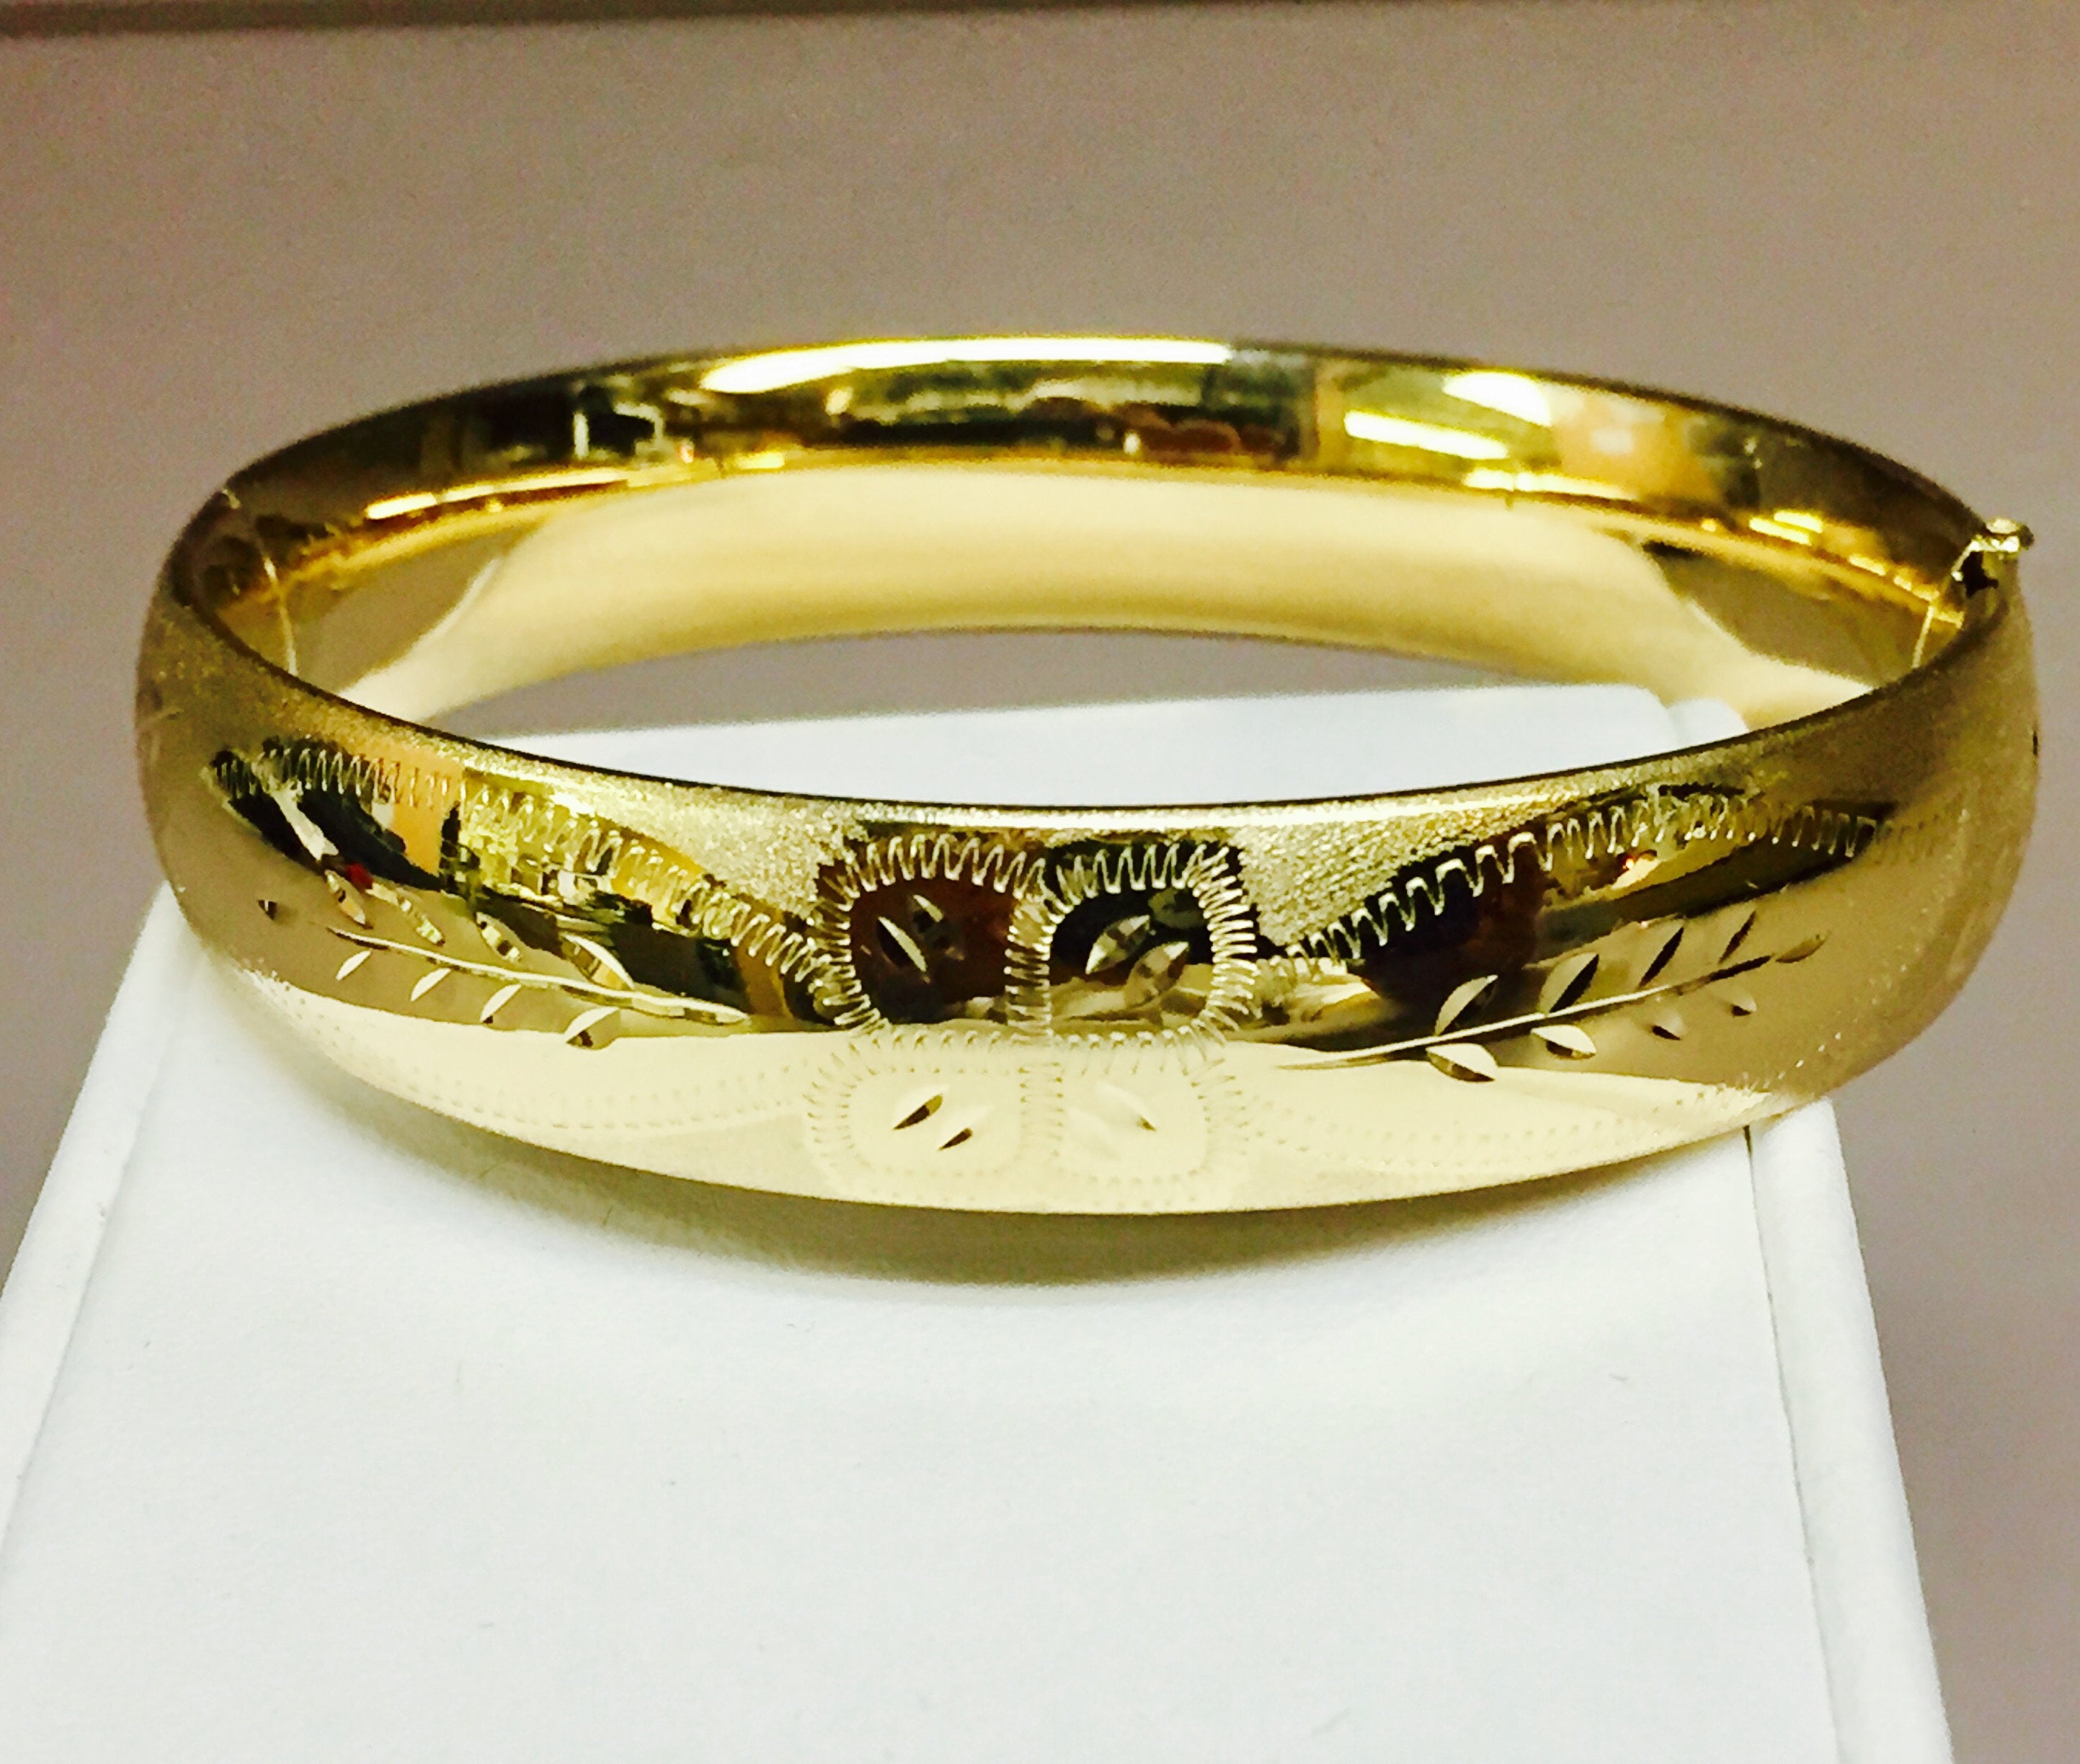 Latest Bracelet Designs for Ladies in Gold